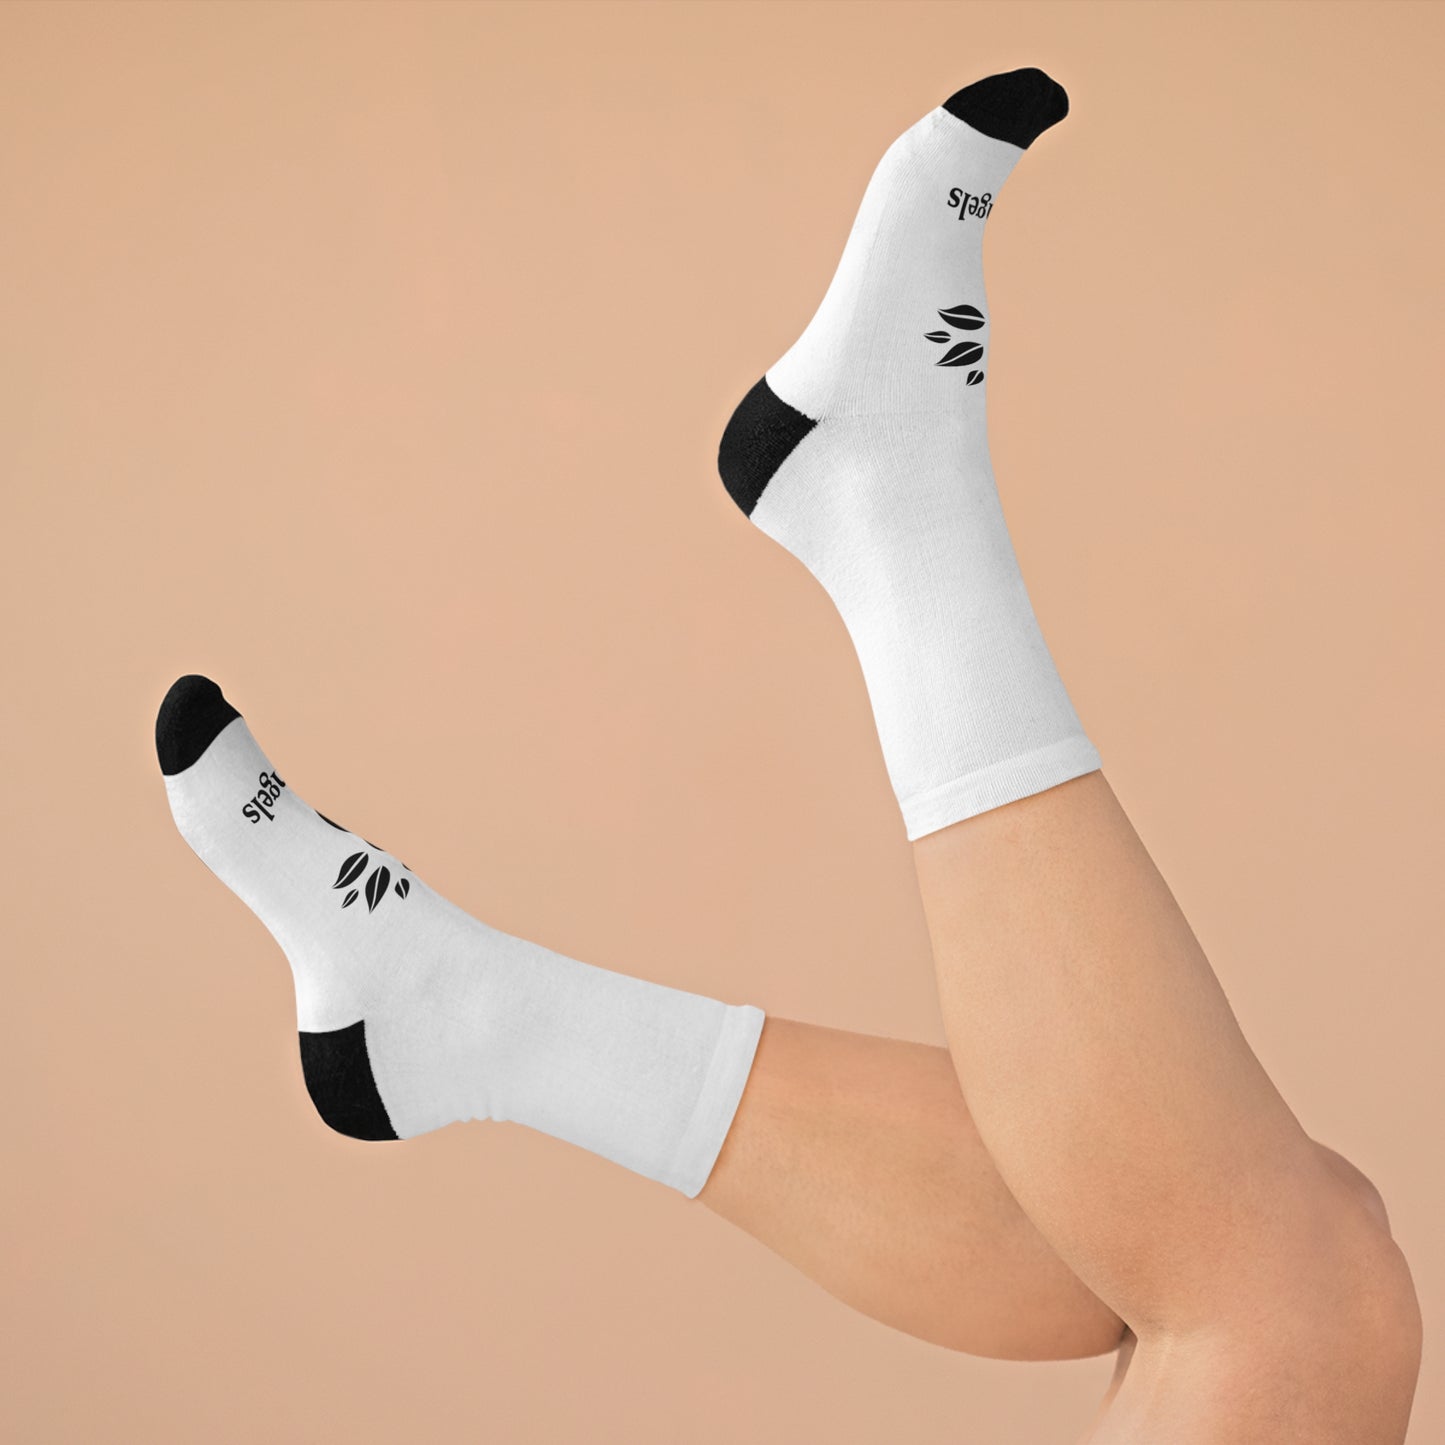 DNAngels Logo Socks